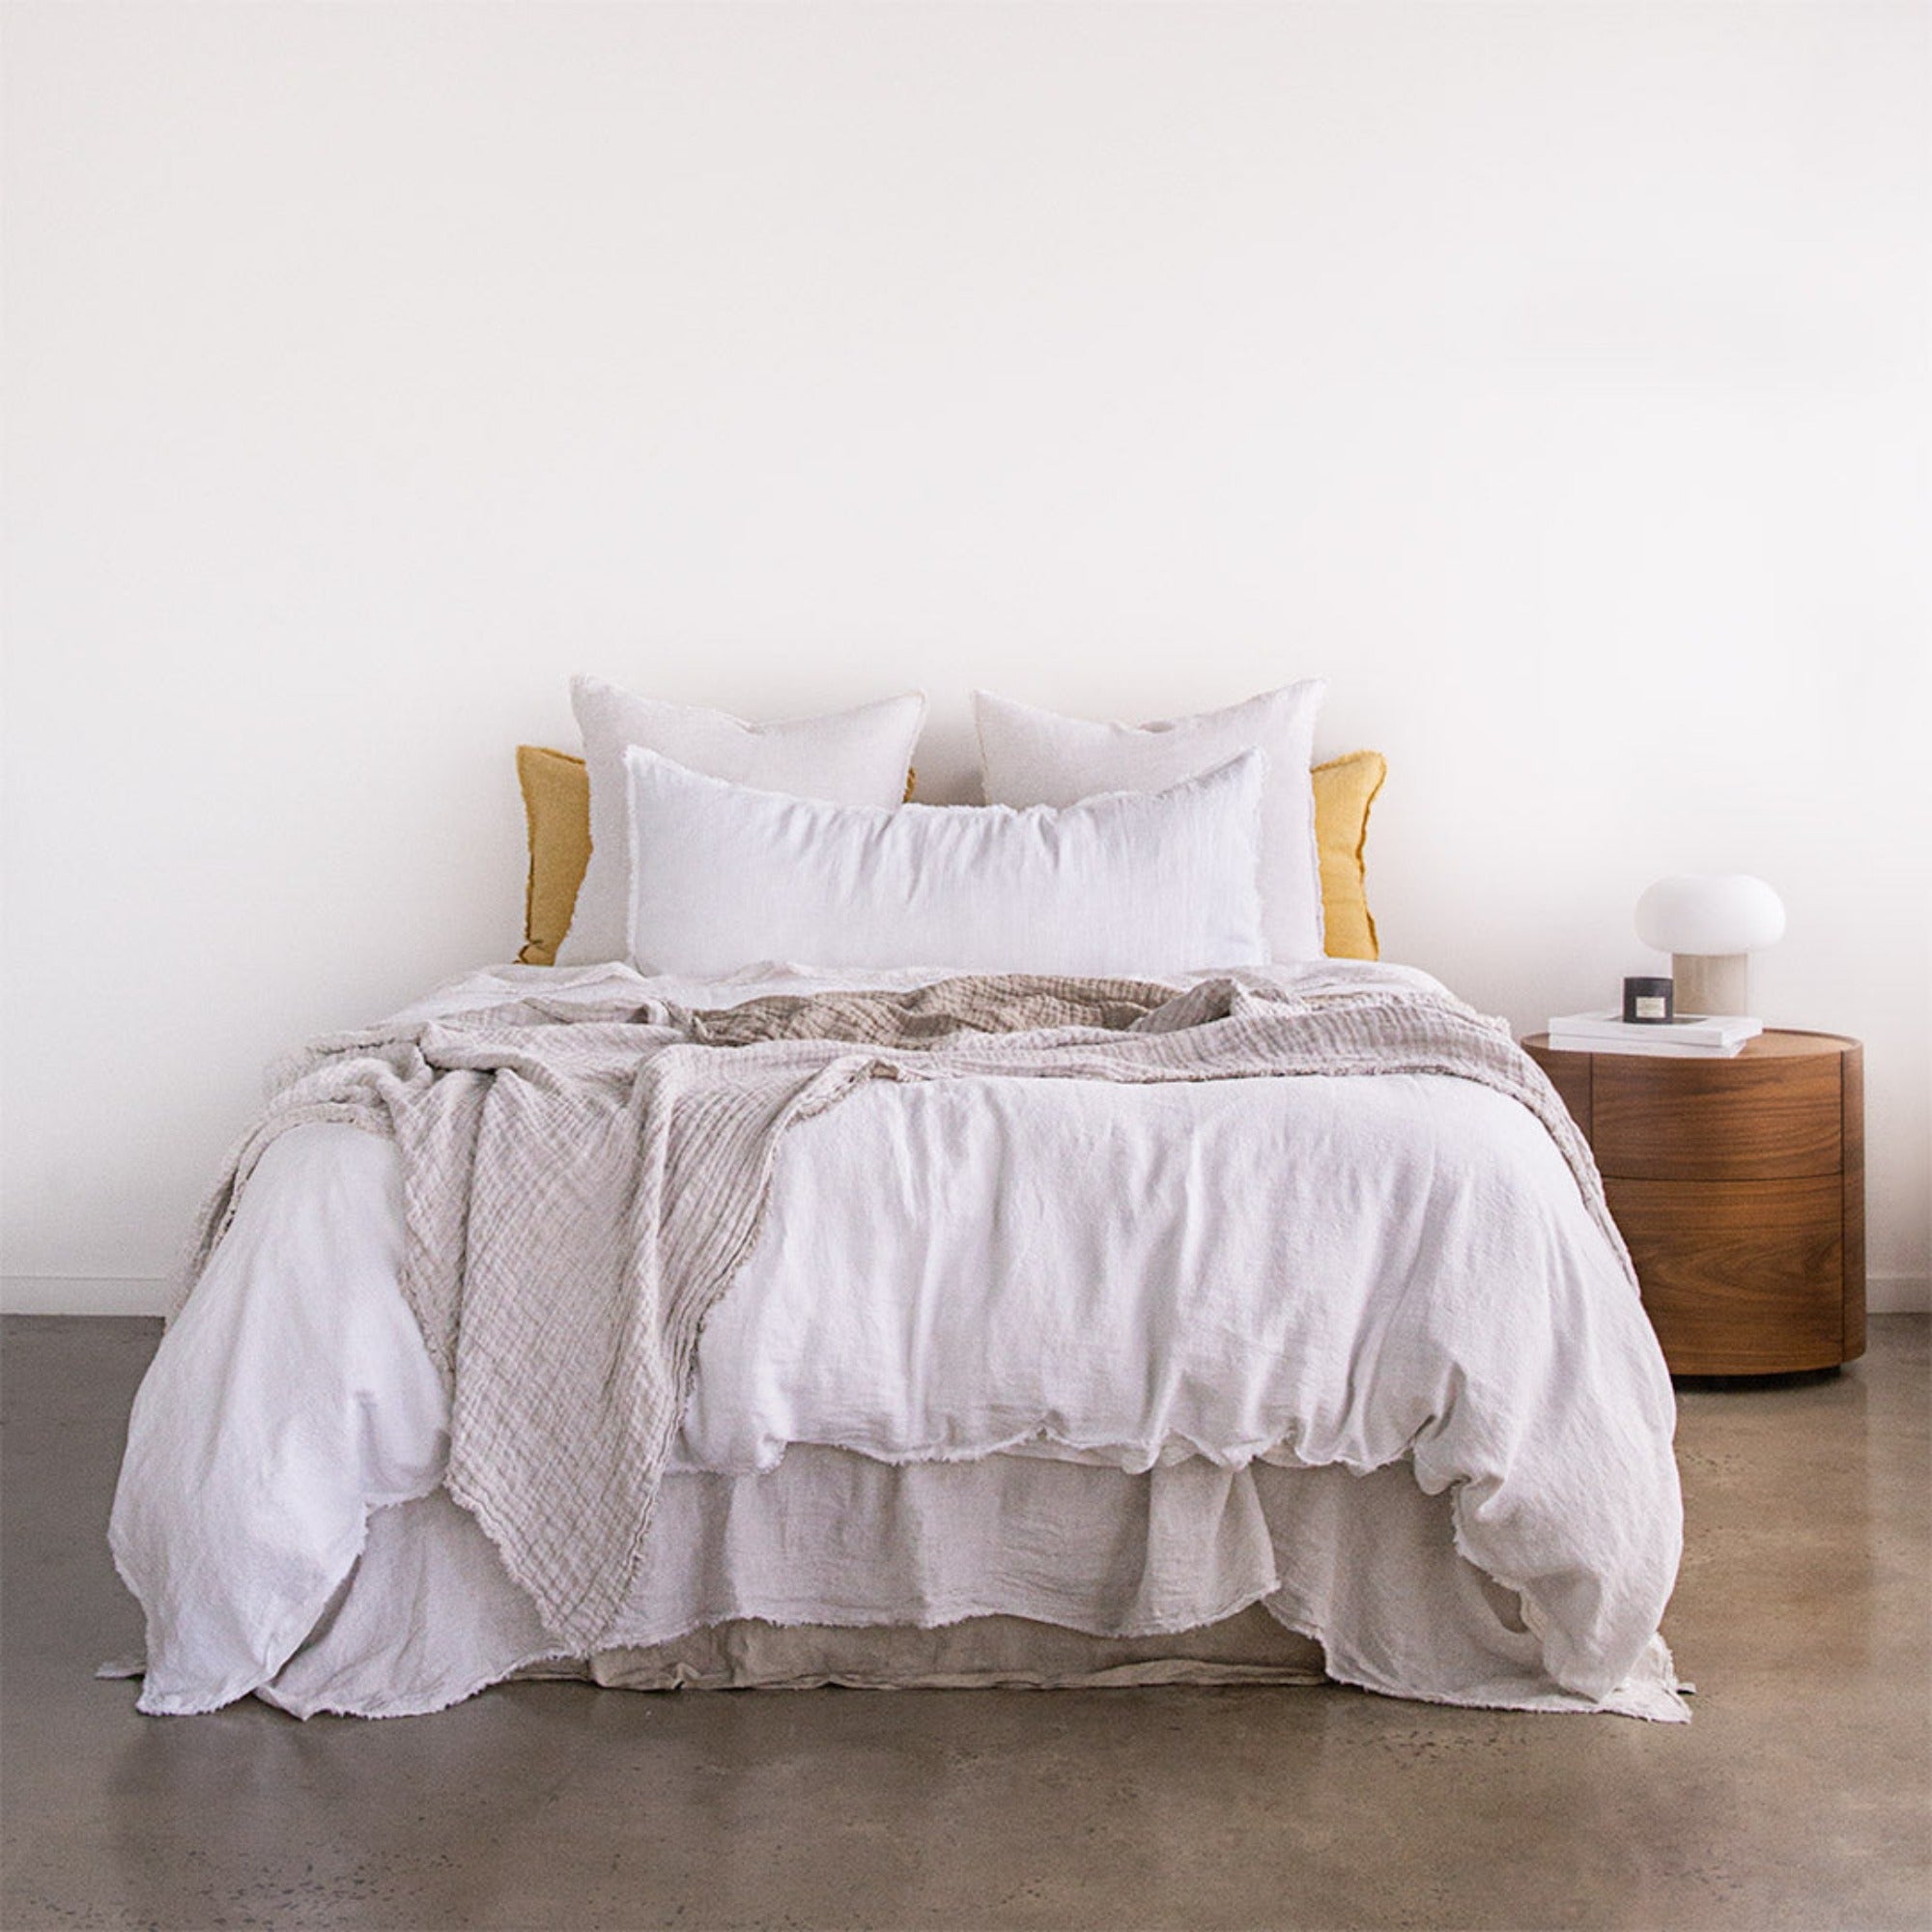 Long Body Pillow | Antique White | Hale Mercantile Co.